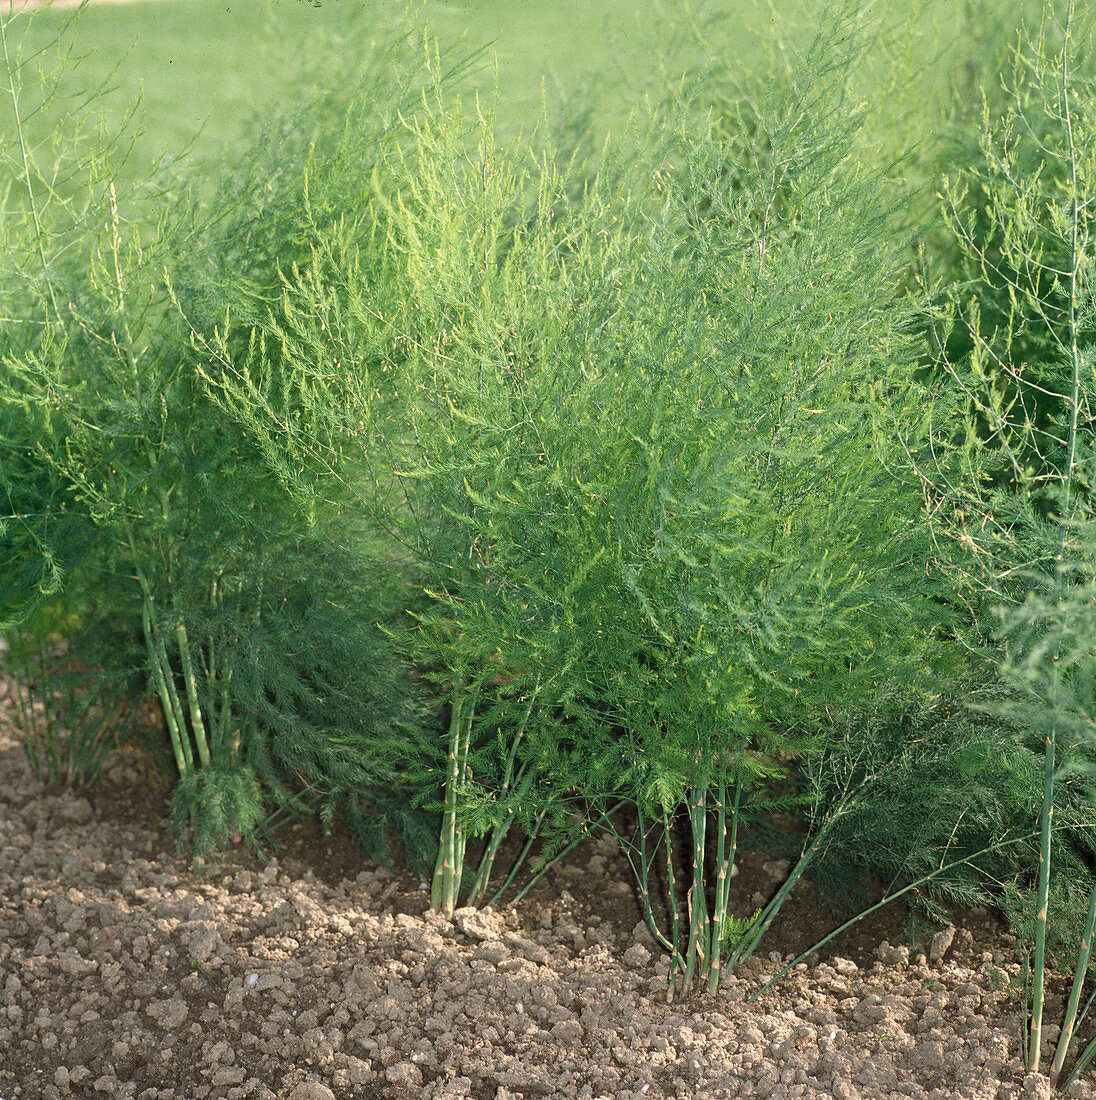 Green herb of vegetable asparagus (Asparagus officinalis)